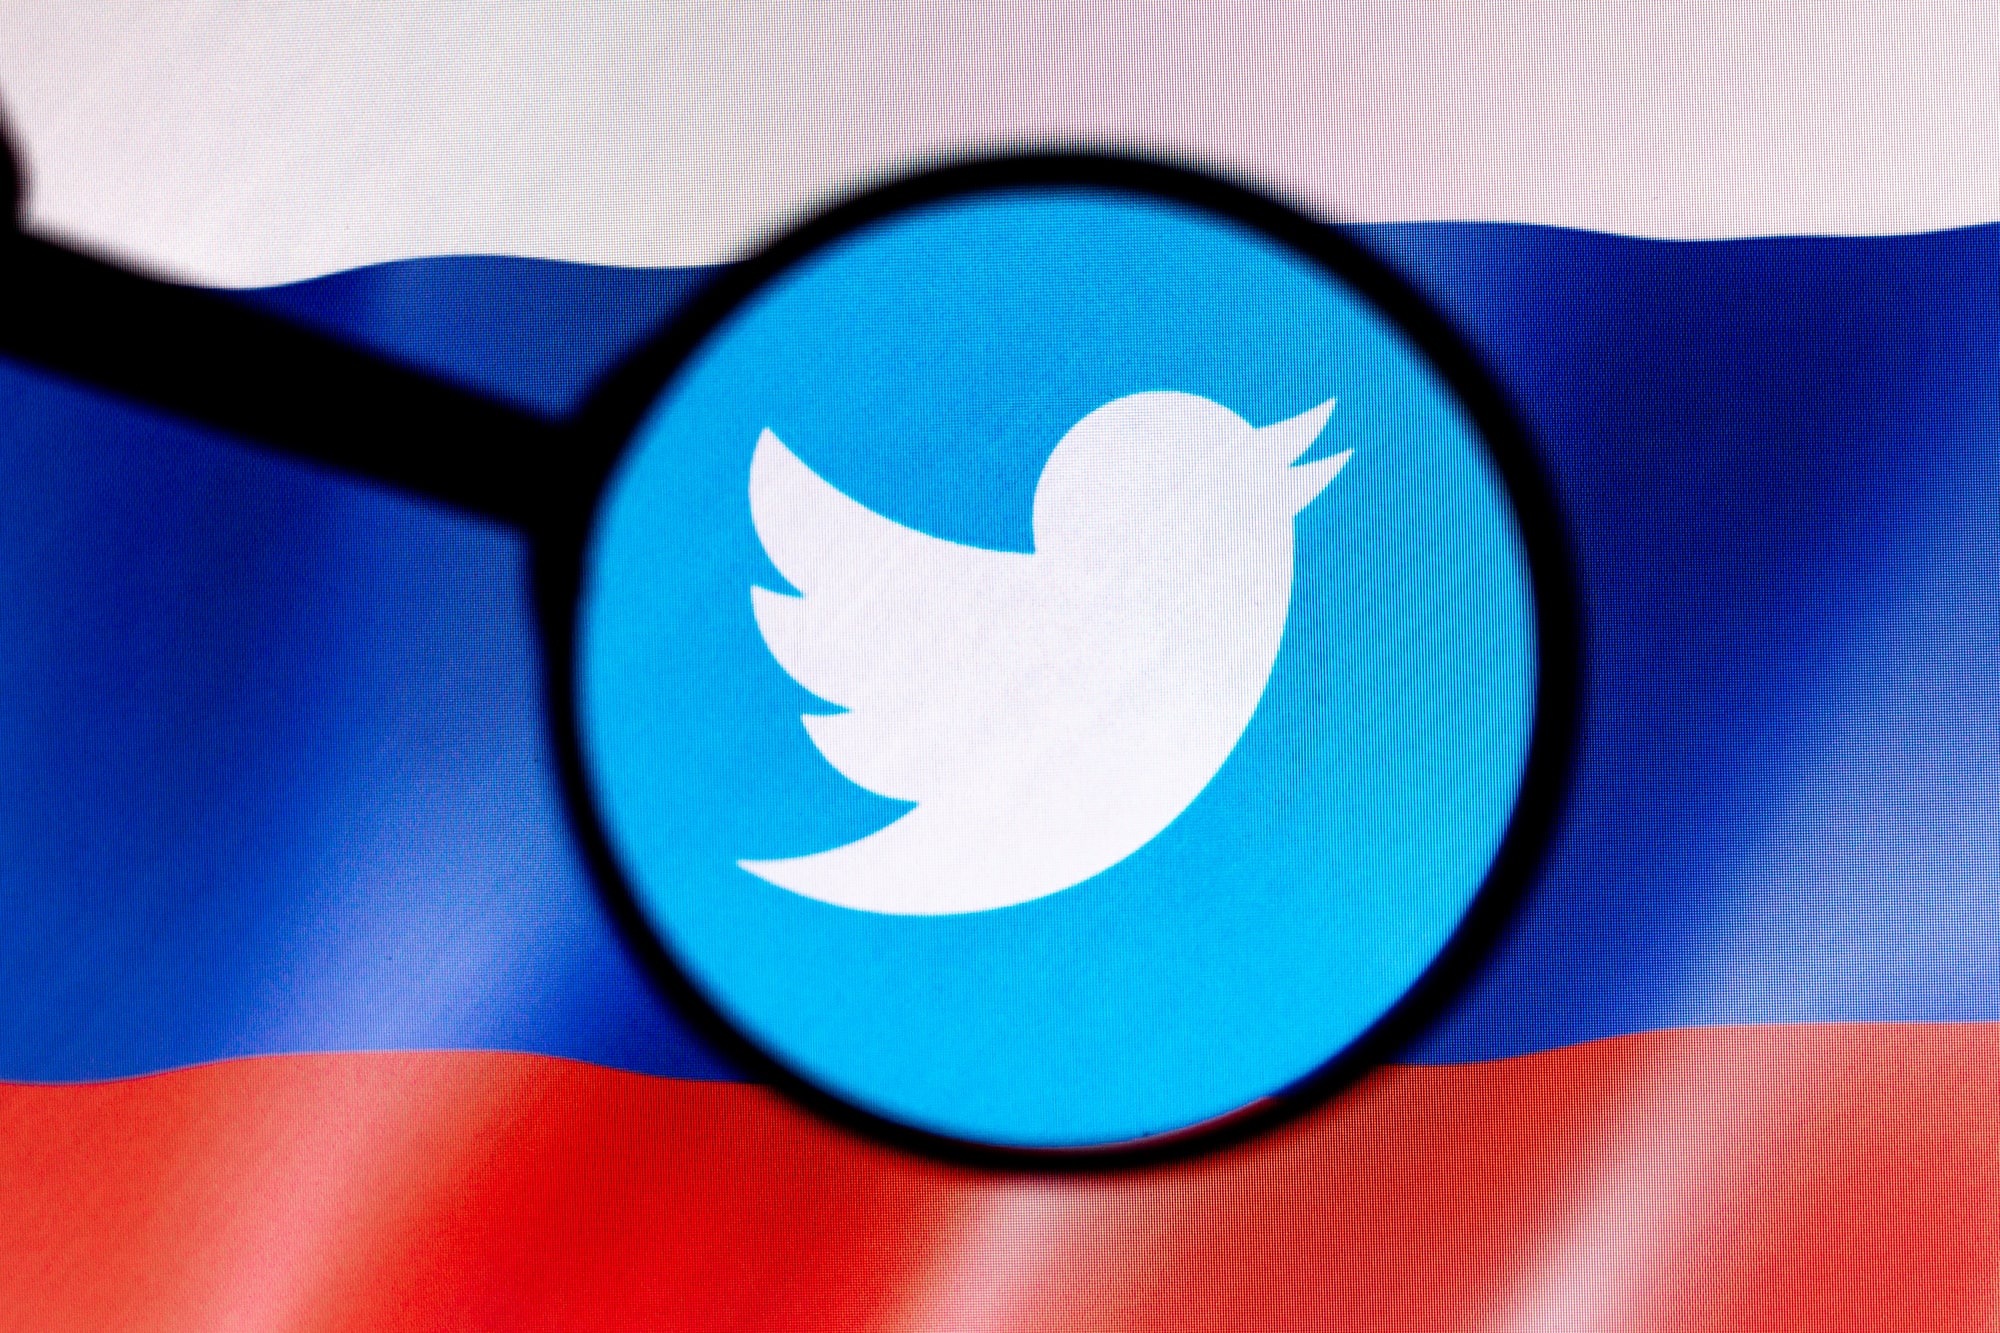 Russian disinformation on Twitter